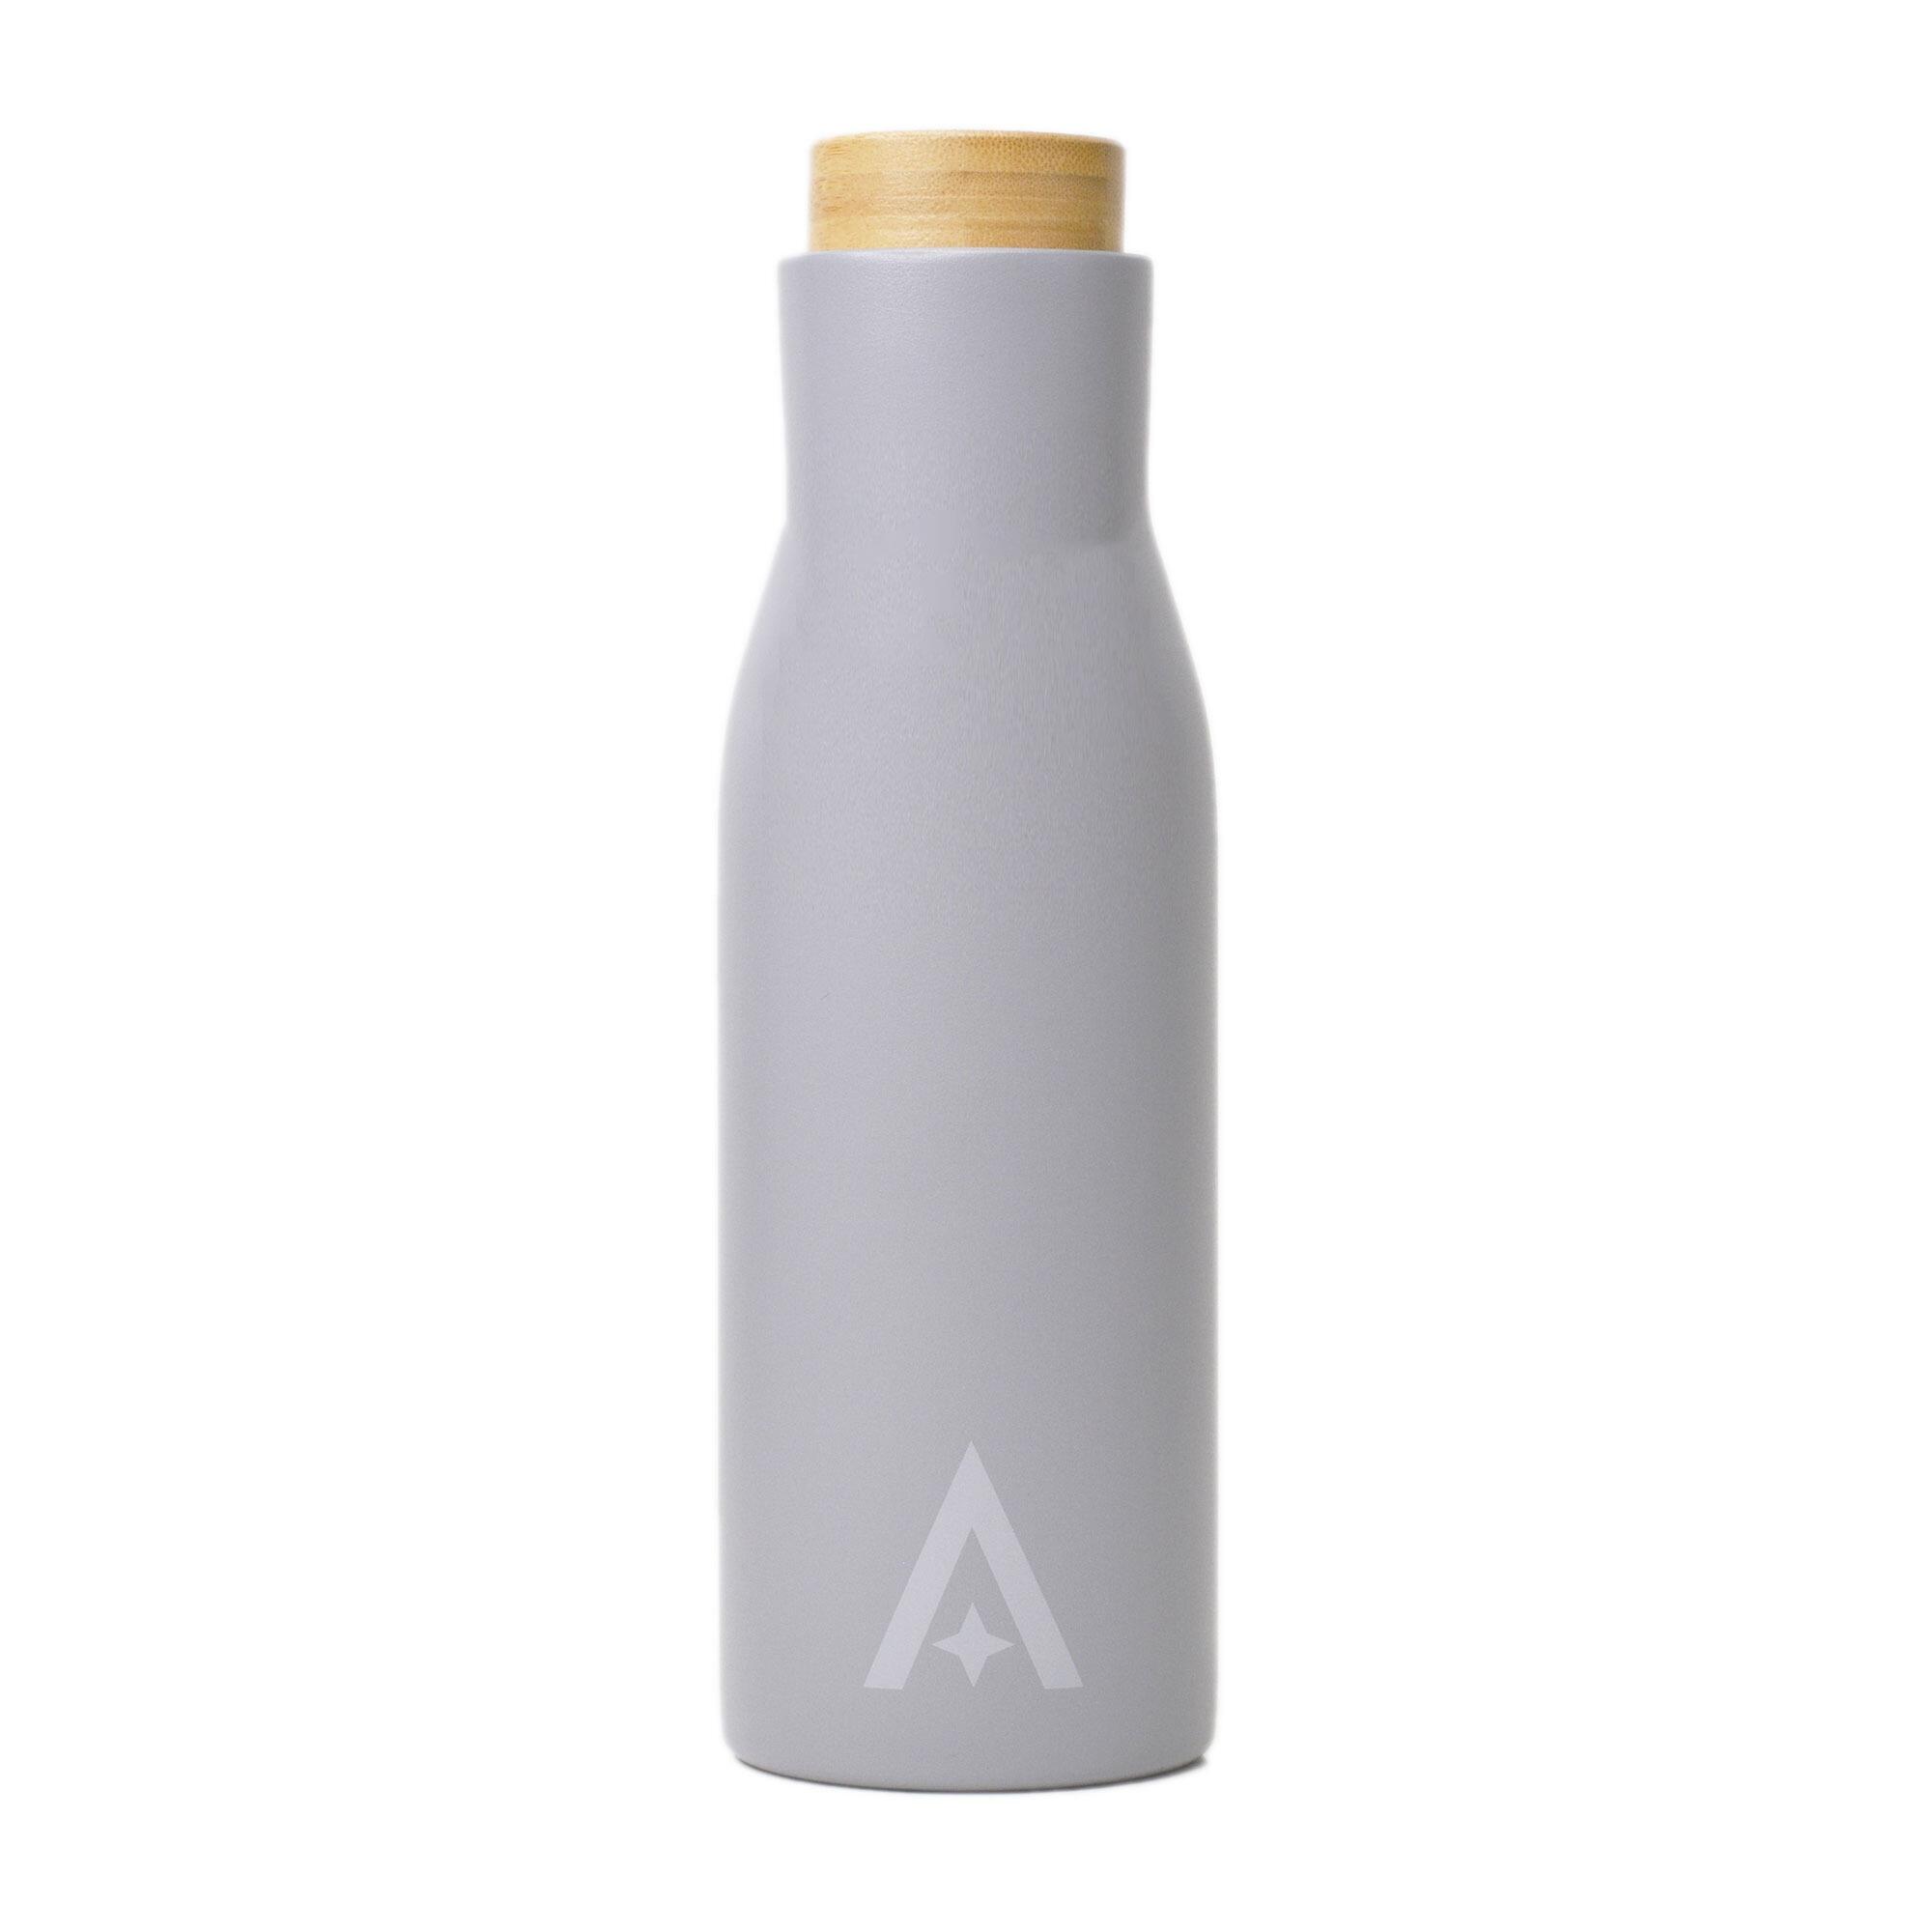 UBERSTAR Insulated Travel Drinks Bottle - 500ml Grey